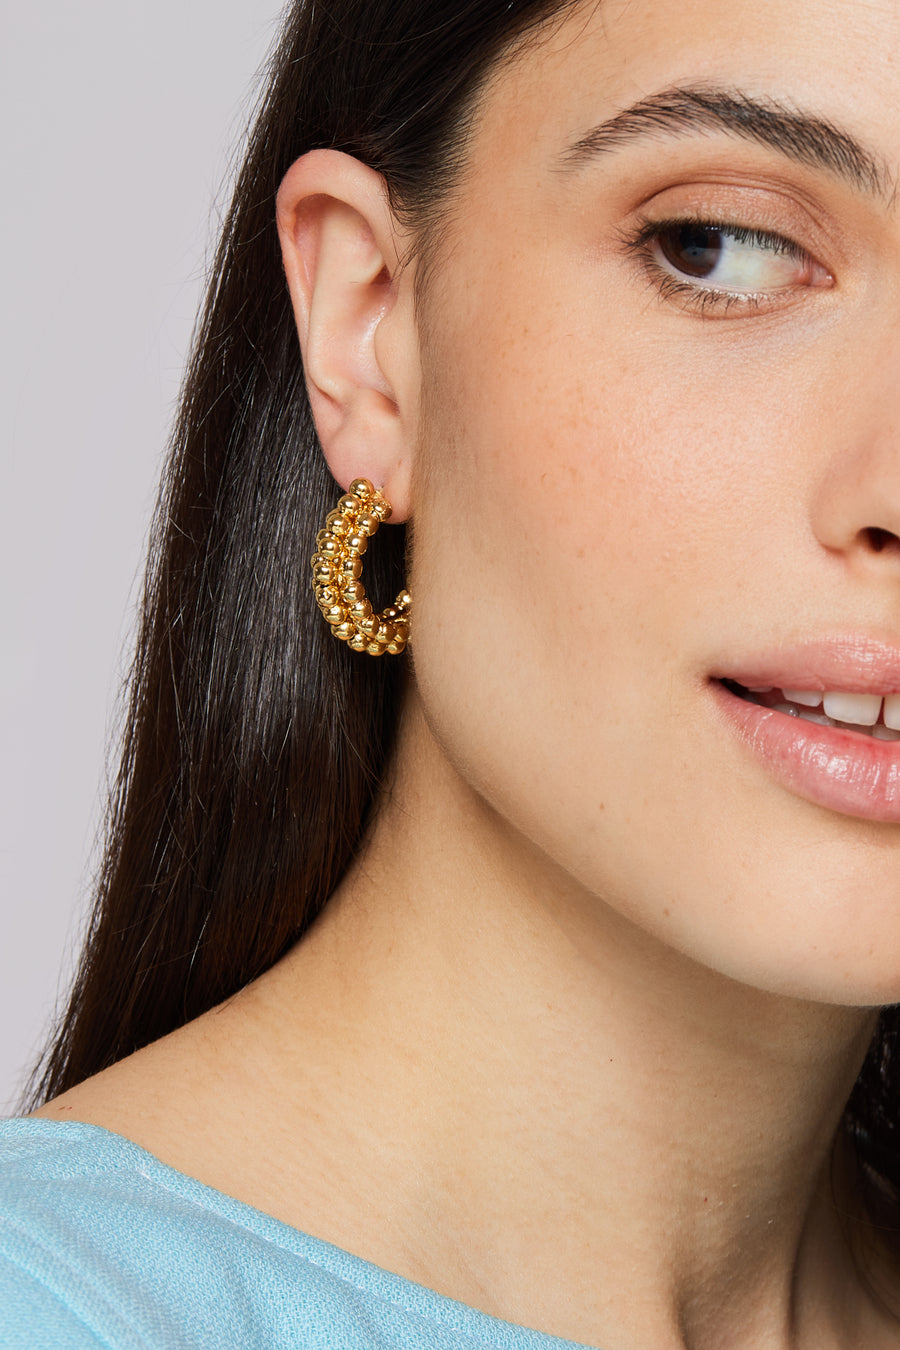 Mary Rose earrings